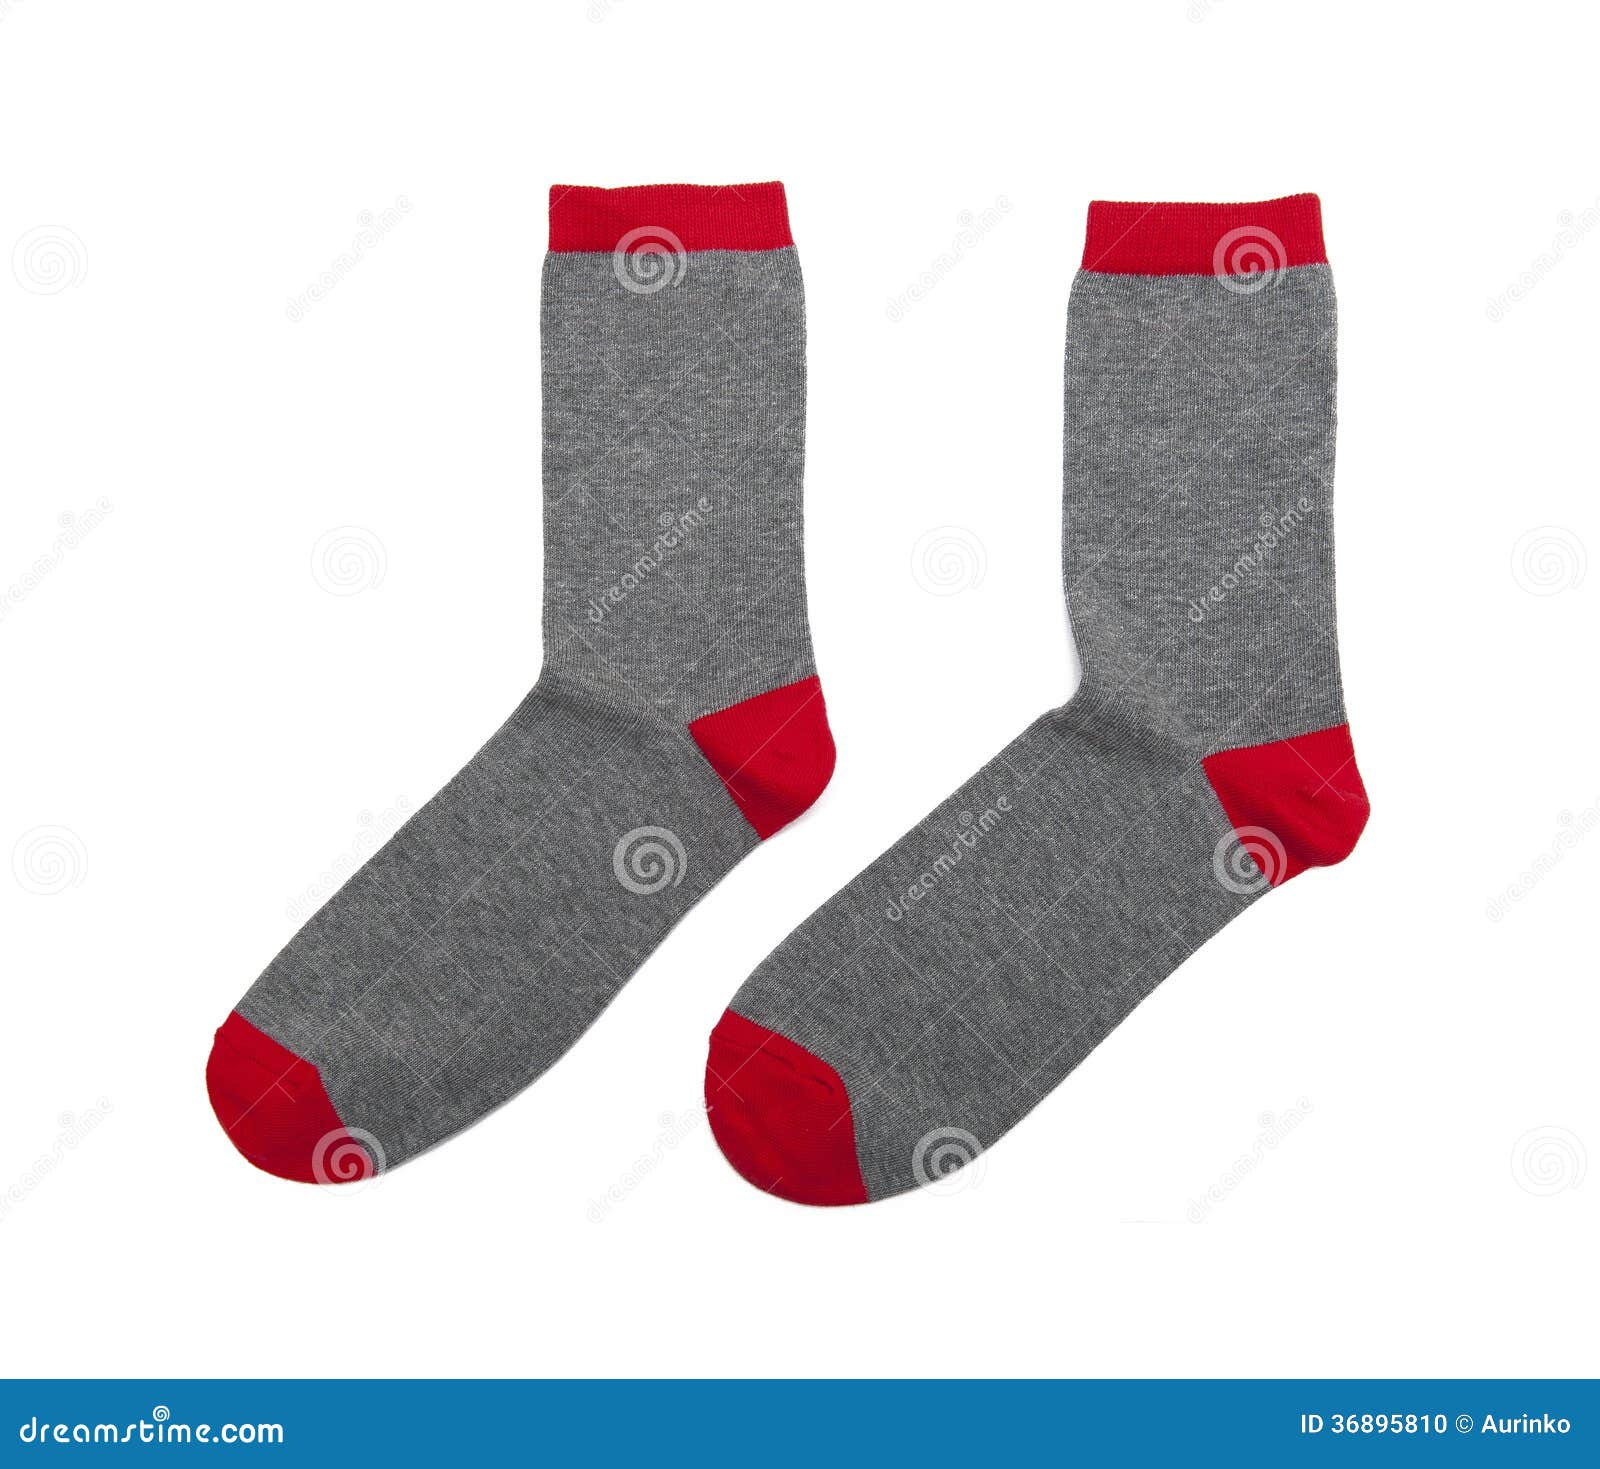 Socks stock photo. Image of pair, gray, bright, background - 36895810